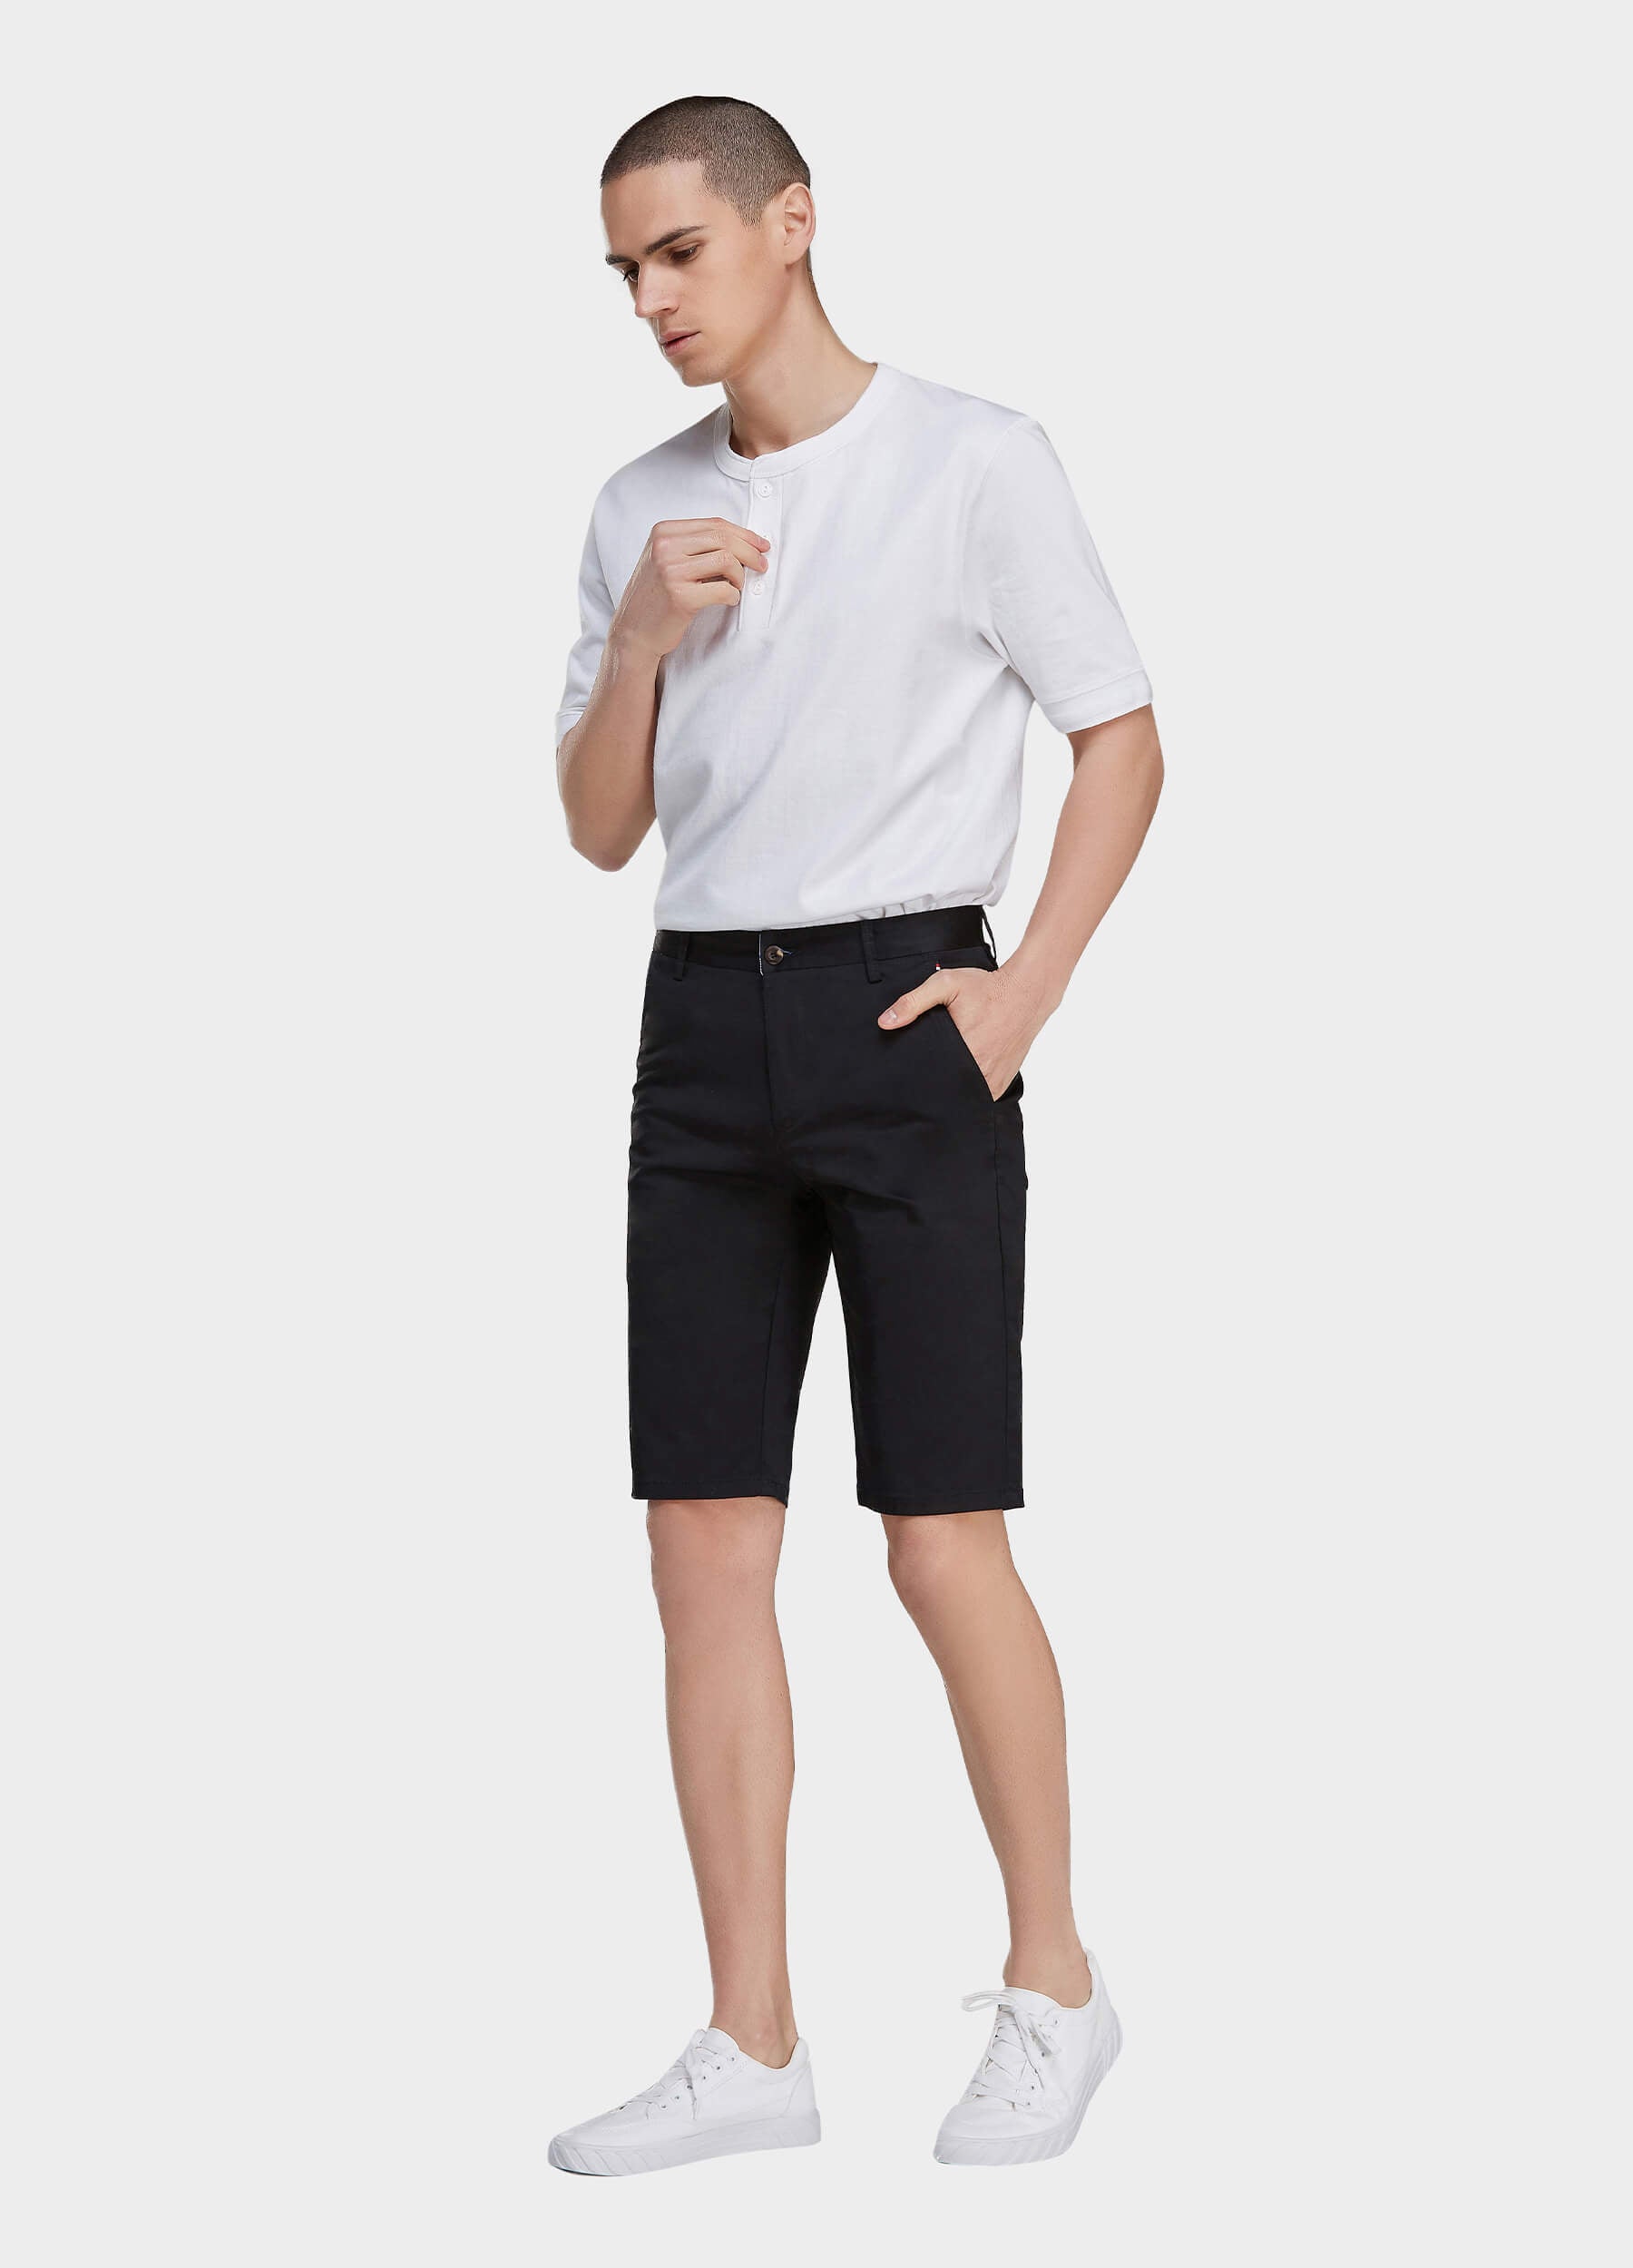 Men's Casual Button Closure Zipper Elasticity Solid Shorts with Slant Pocket-Black side view